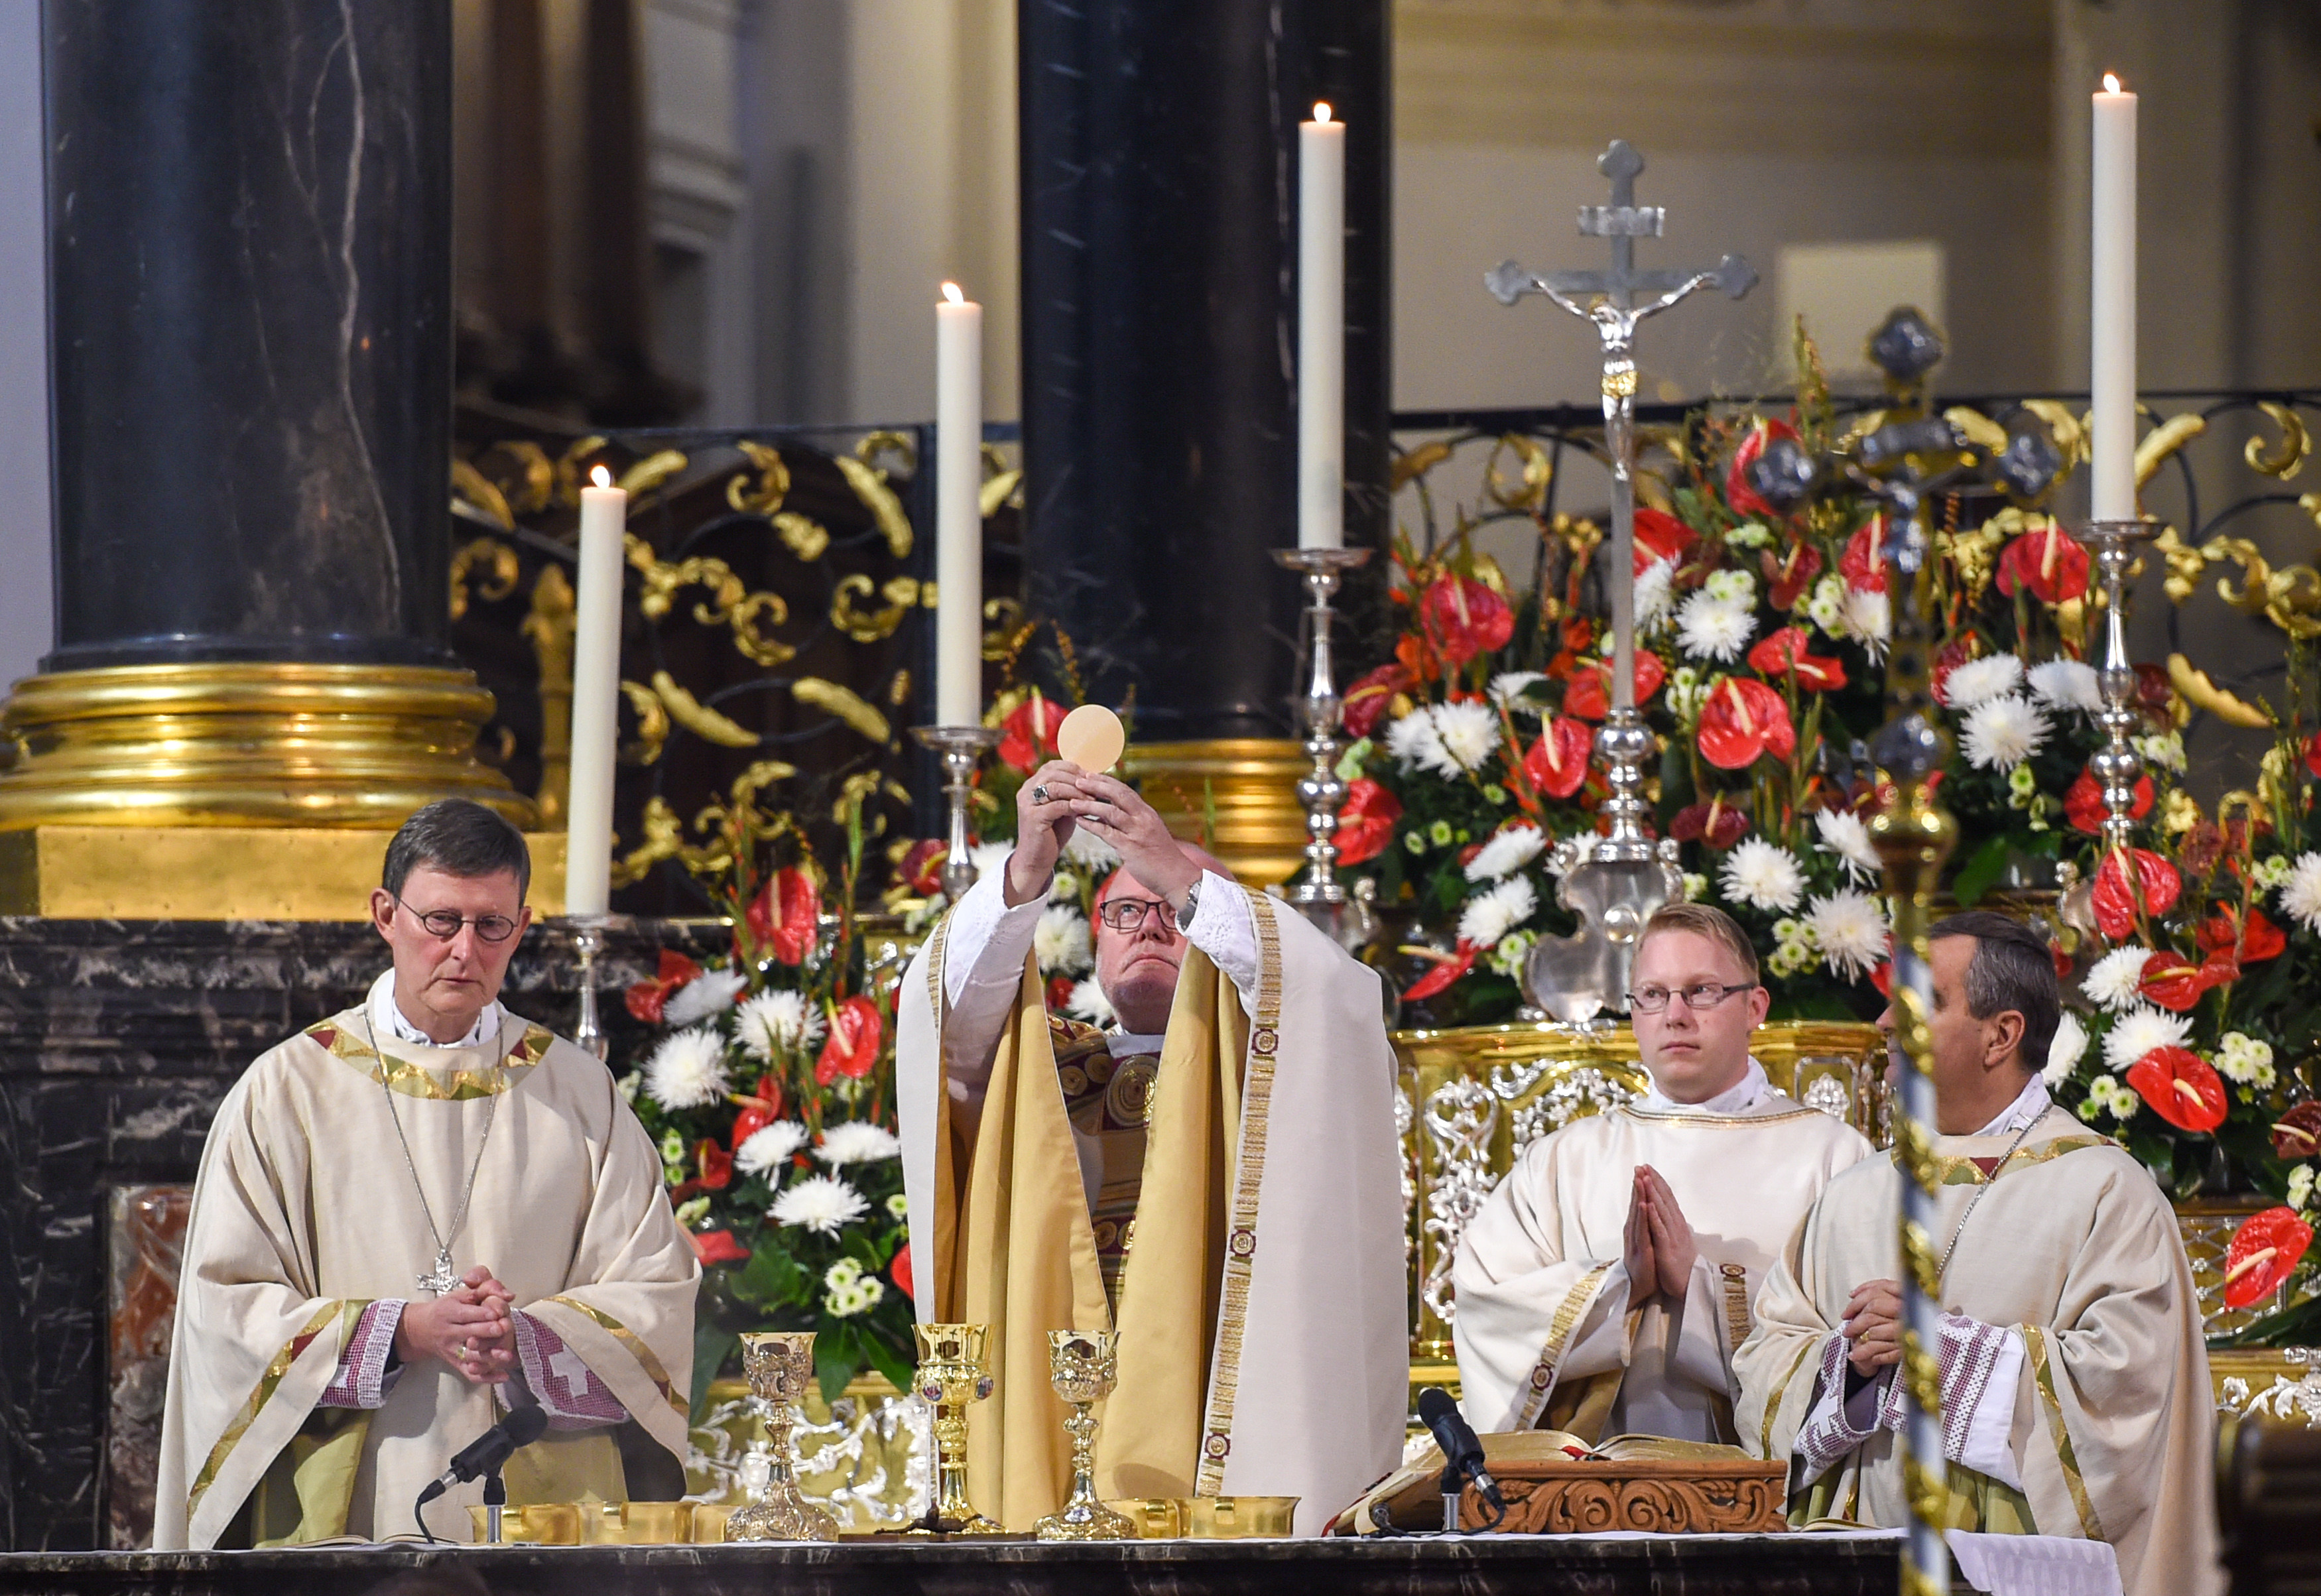 German bishops bring communion dispute to Rome